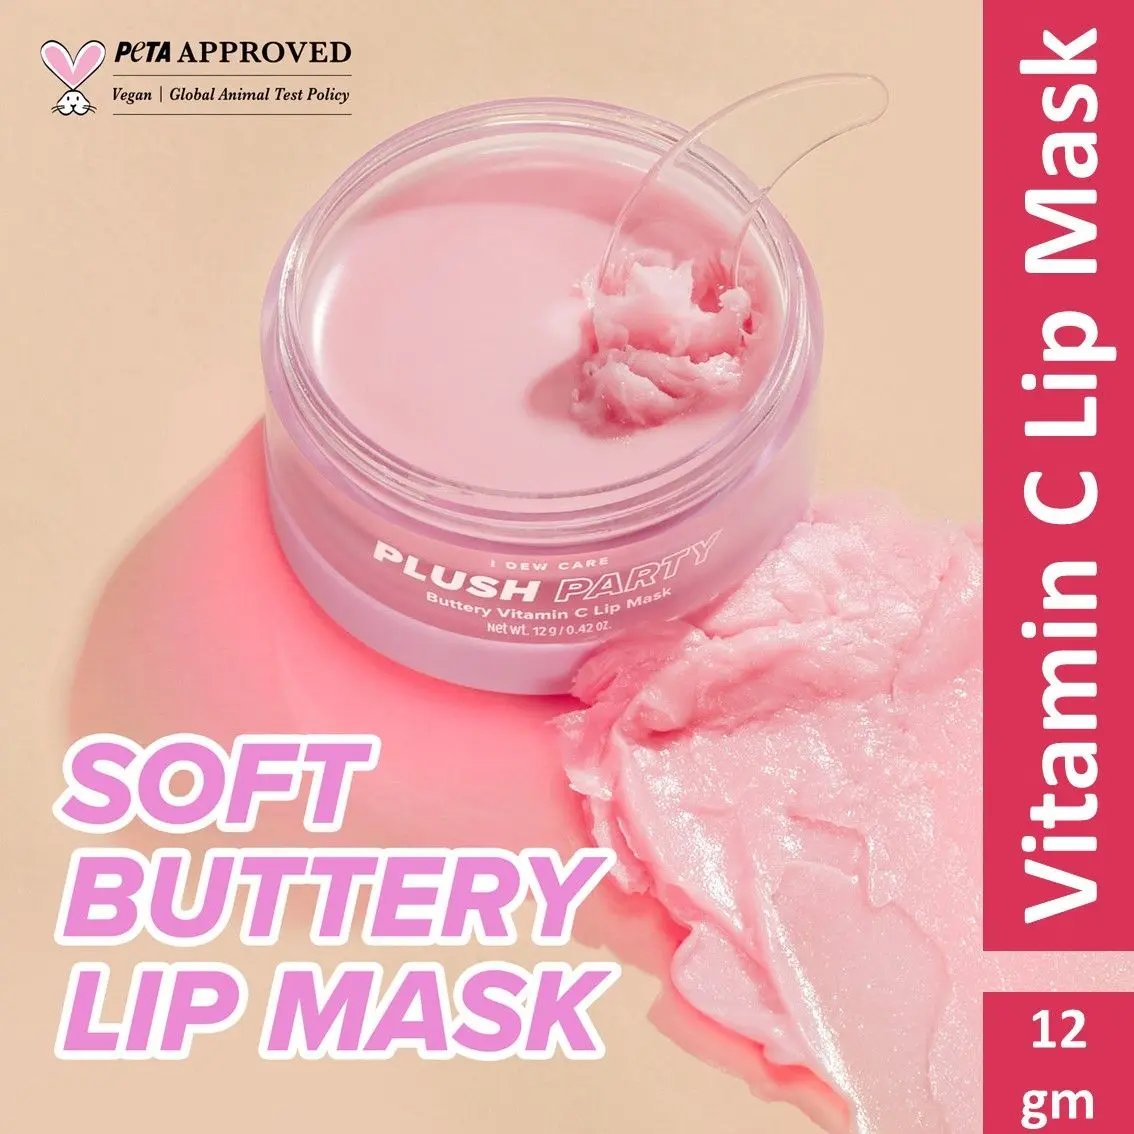 I DEW CARE PLUSH PARTY, Vitamin C Lip Mask | Korean Skin Care